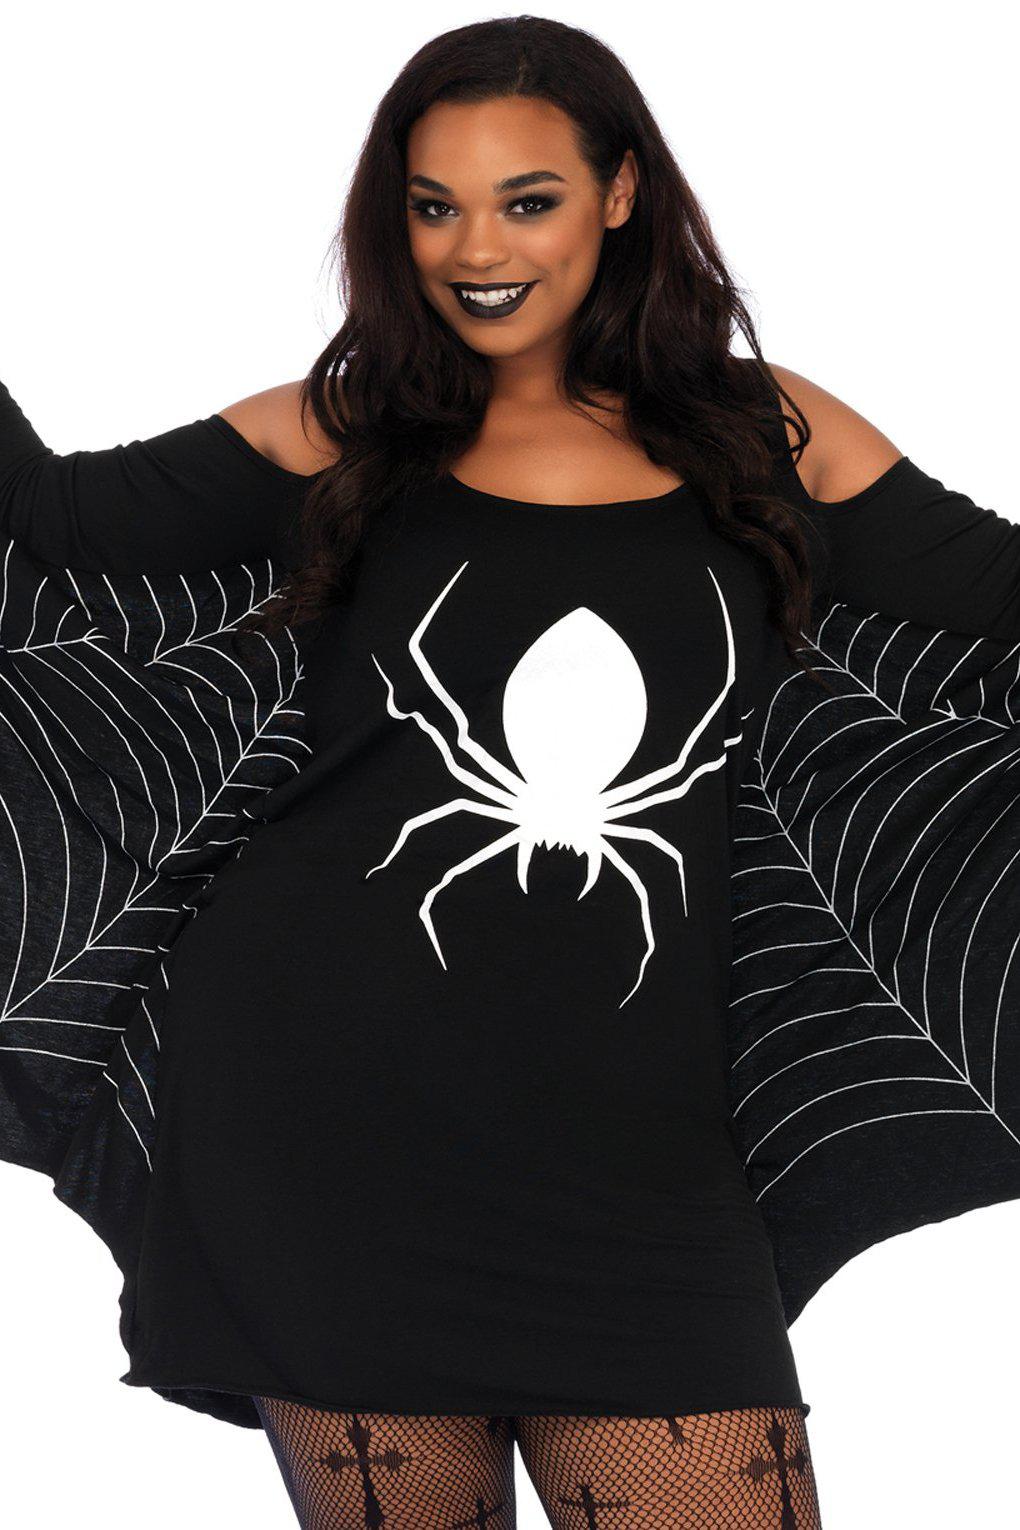 Plus Size Jersey Spiderweb Dress-Other Costumes-Leg Avenue-Black-1/2XL-SEXYSHOES.COM